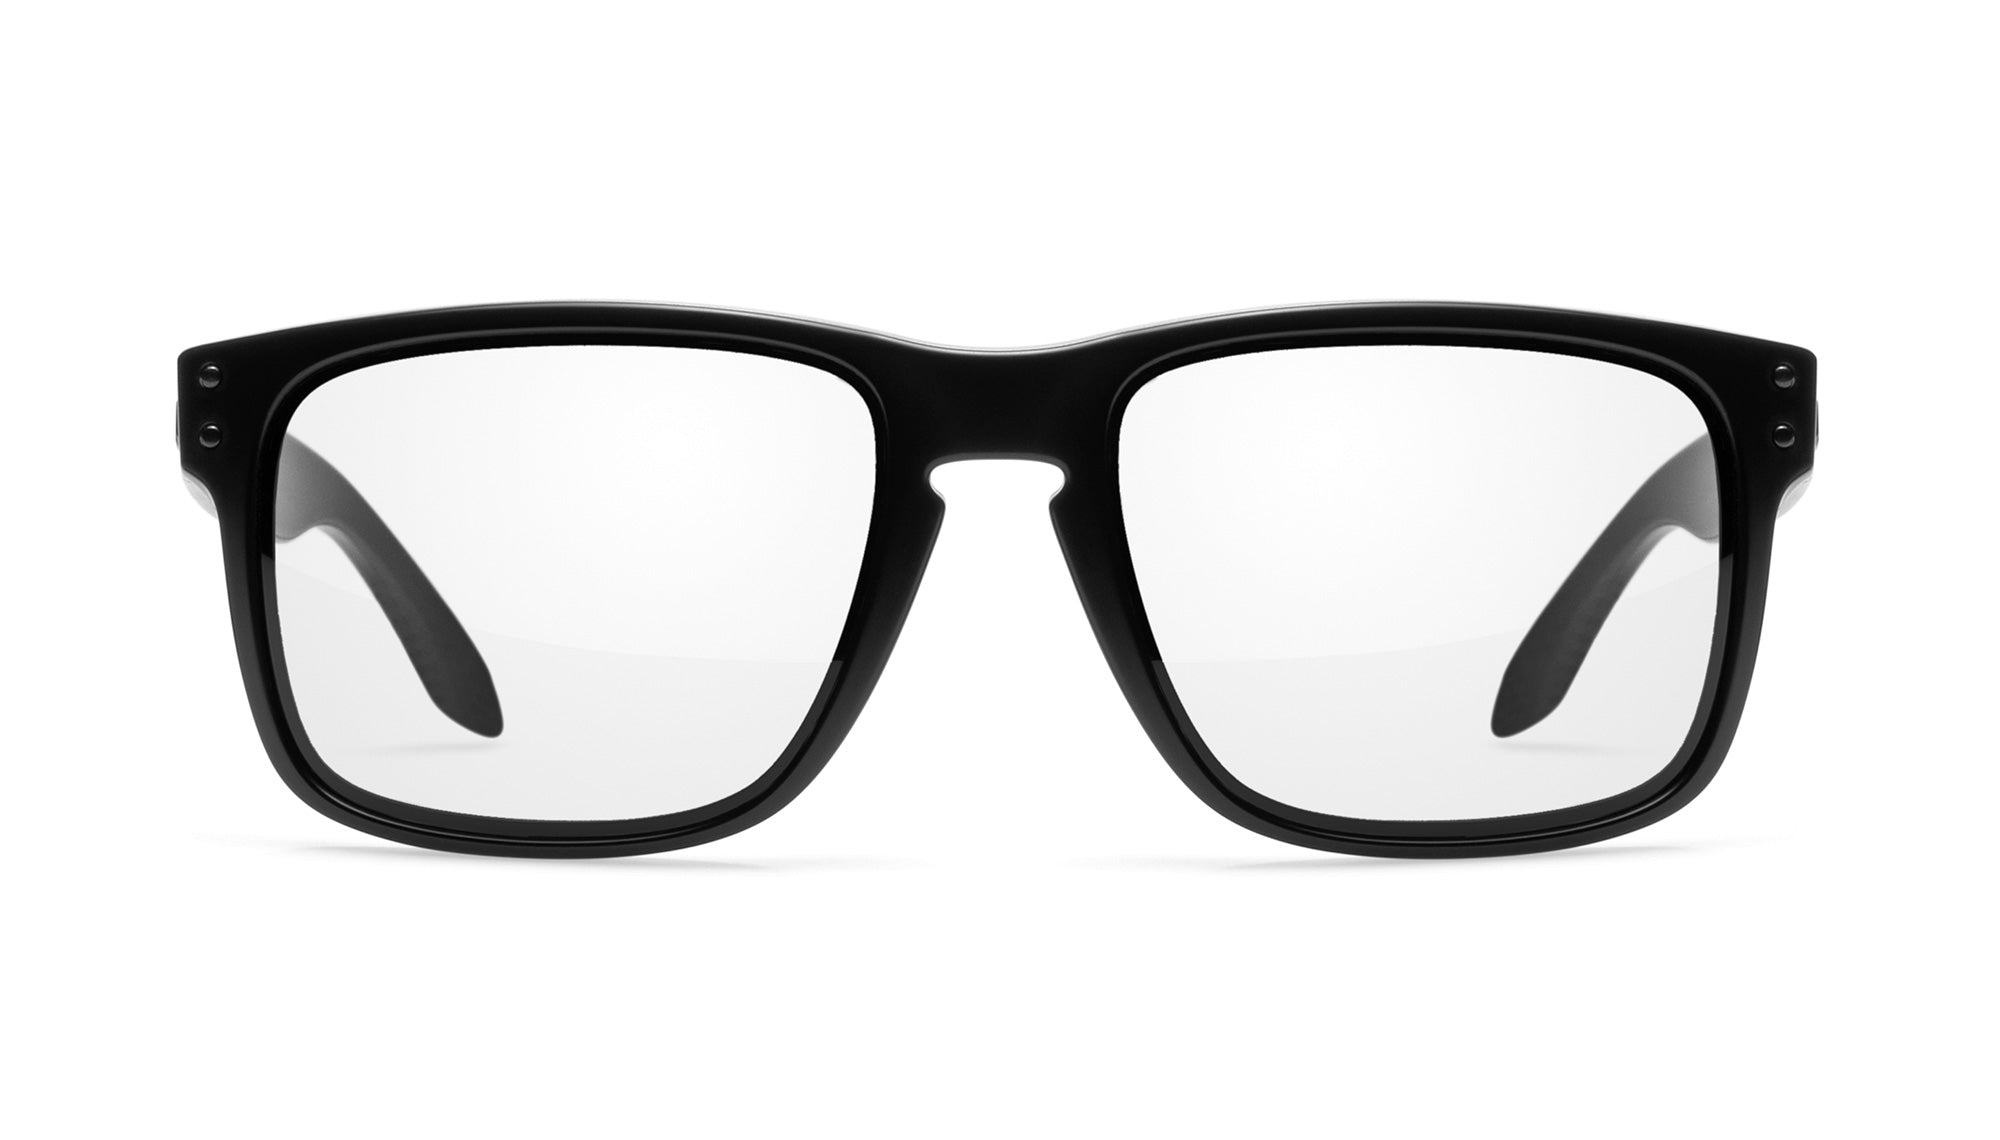 Clear lenses in a glasses frame